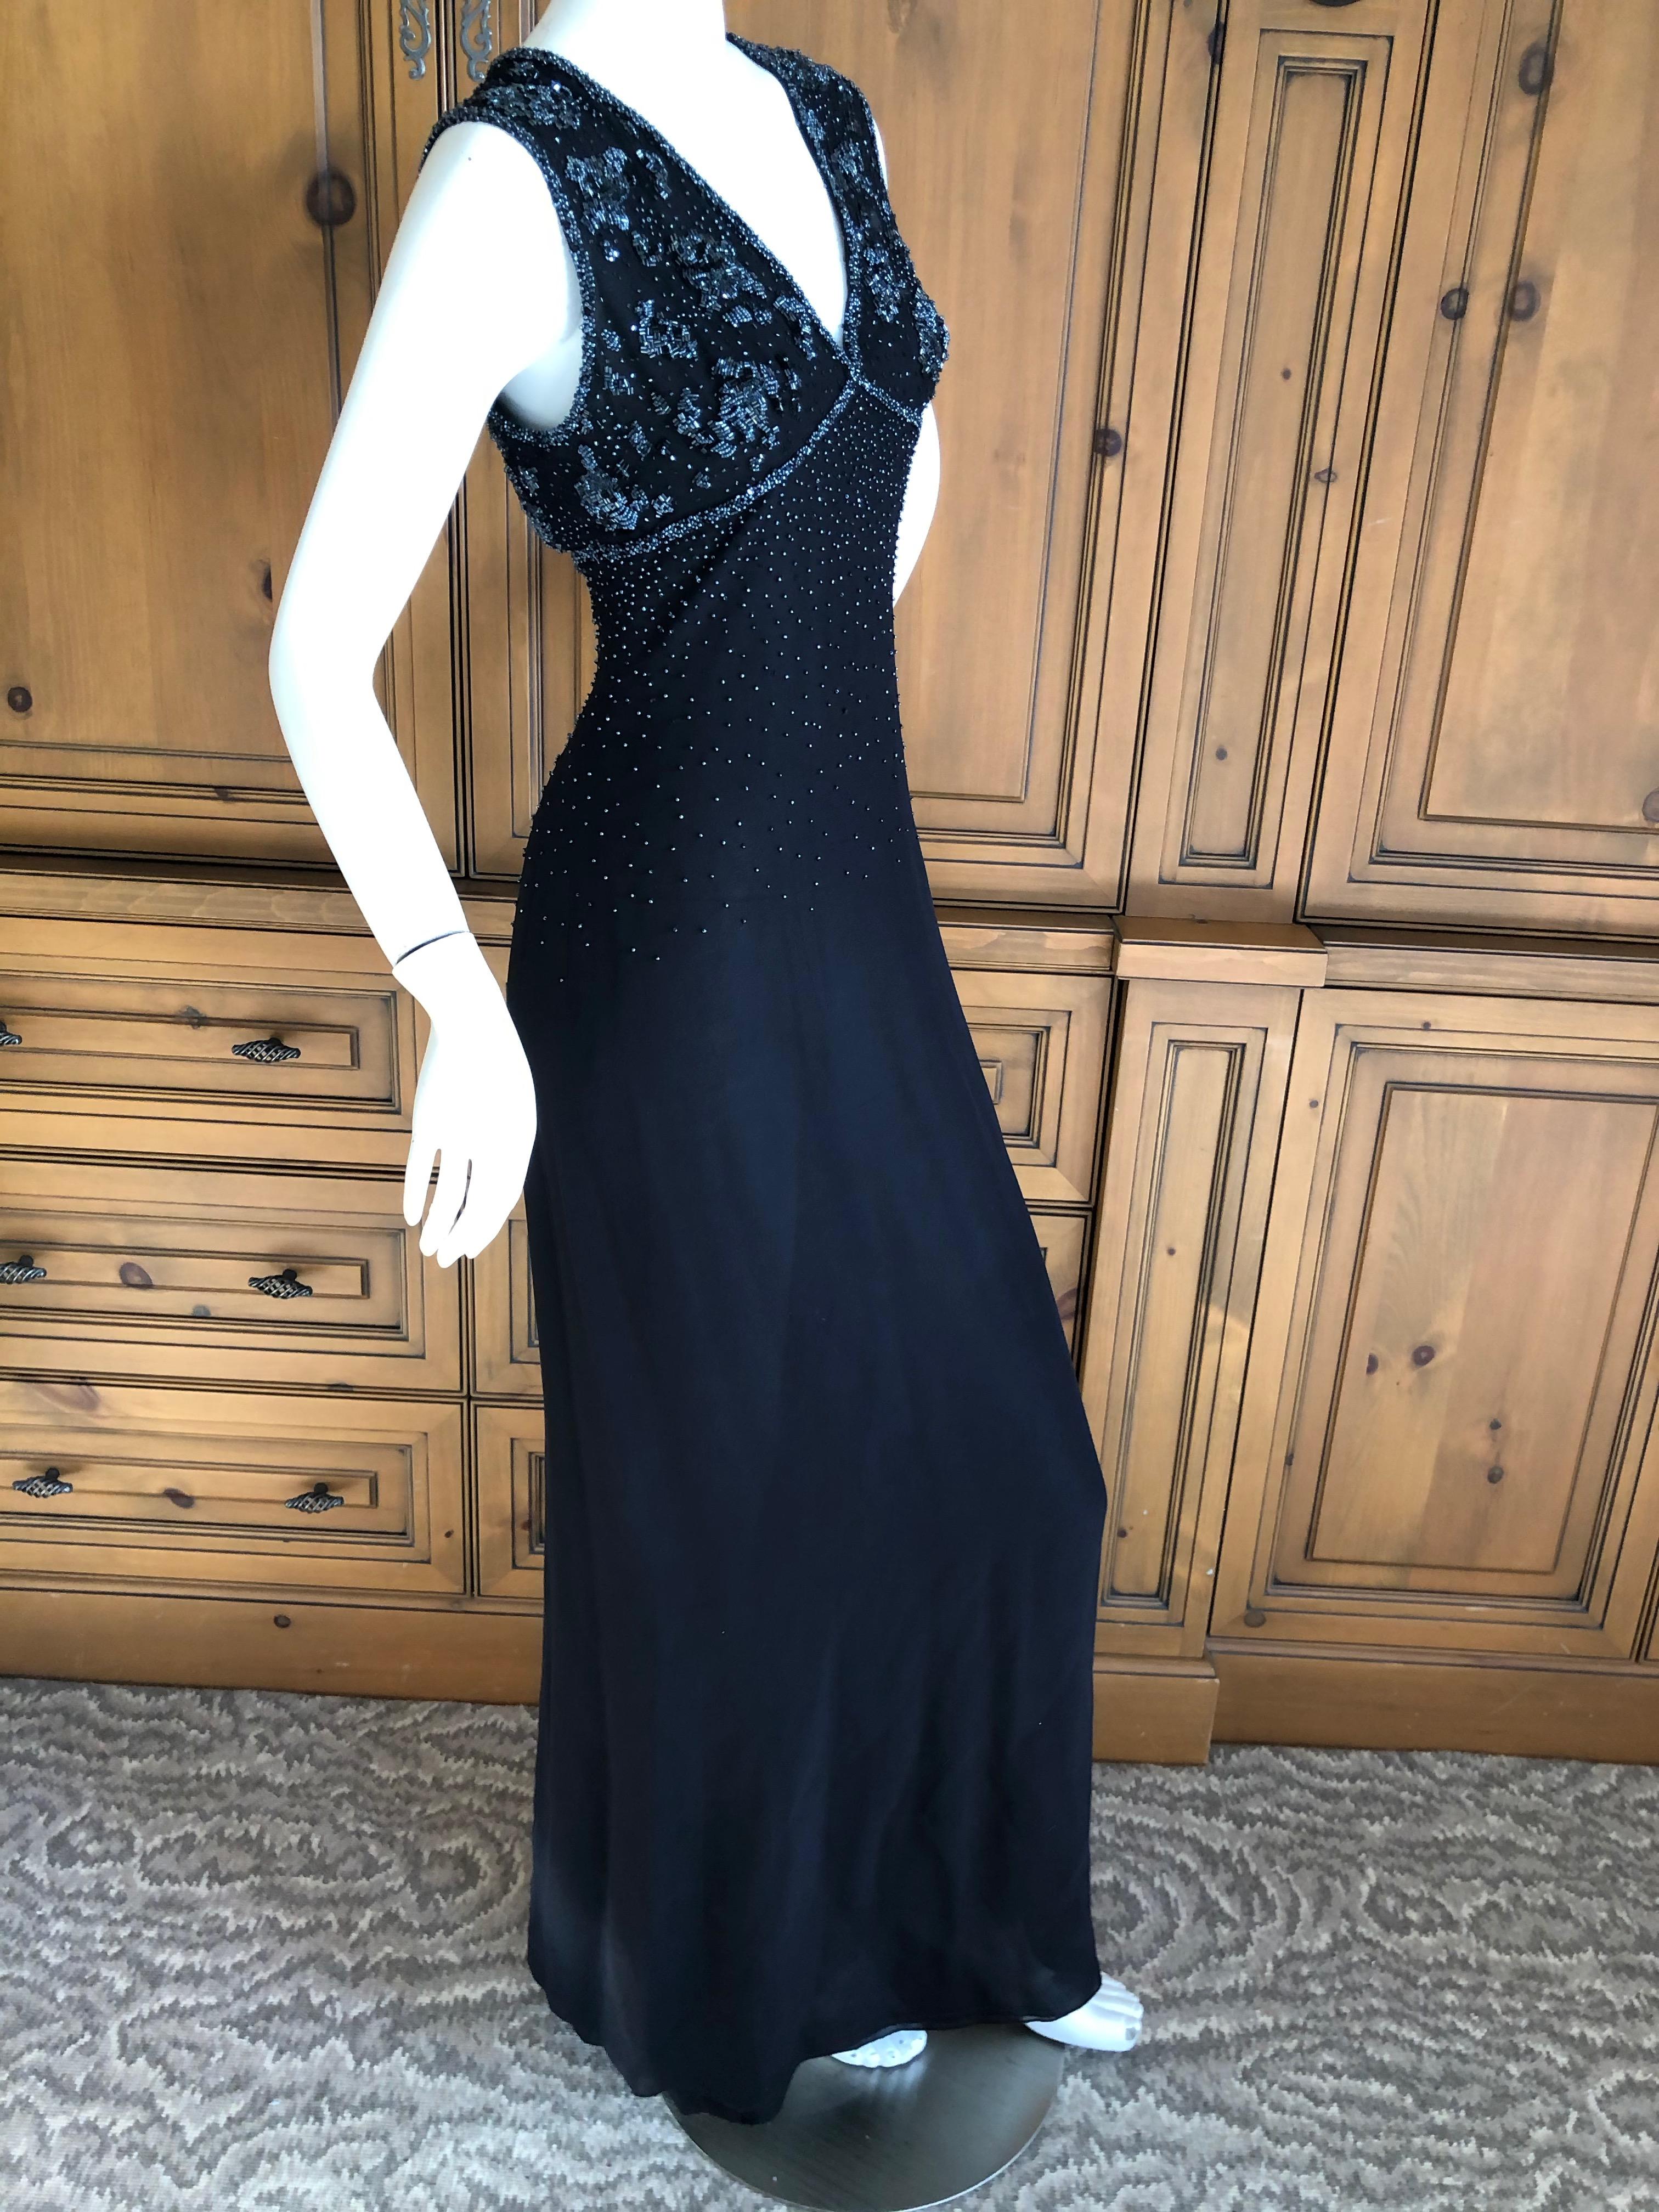 Emanuel Ungaro Parallel Vintage Black Evening Dress w Hematite Seed Bead Details For Sale 4